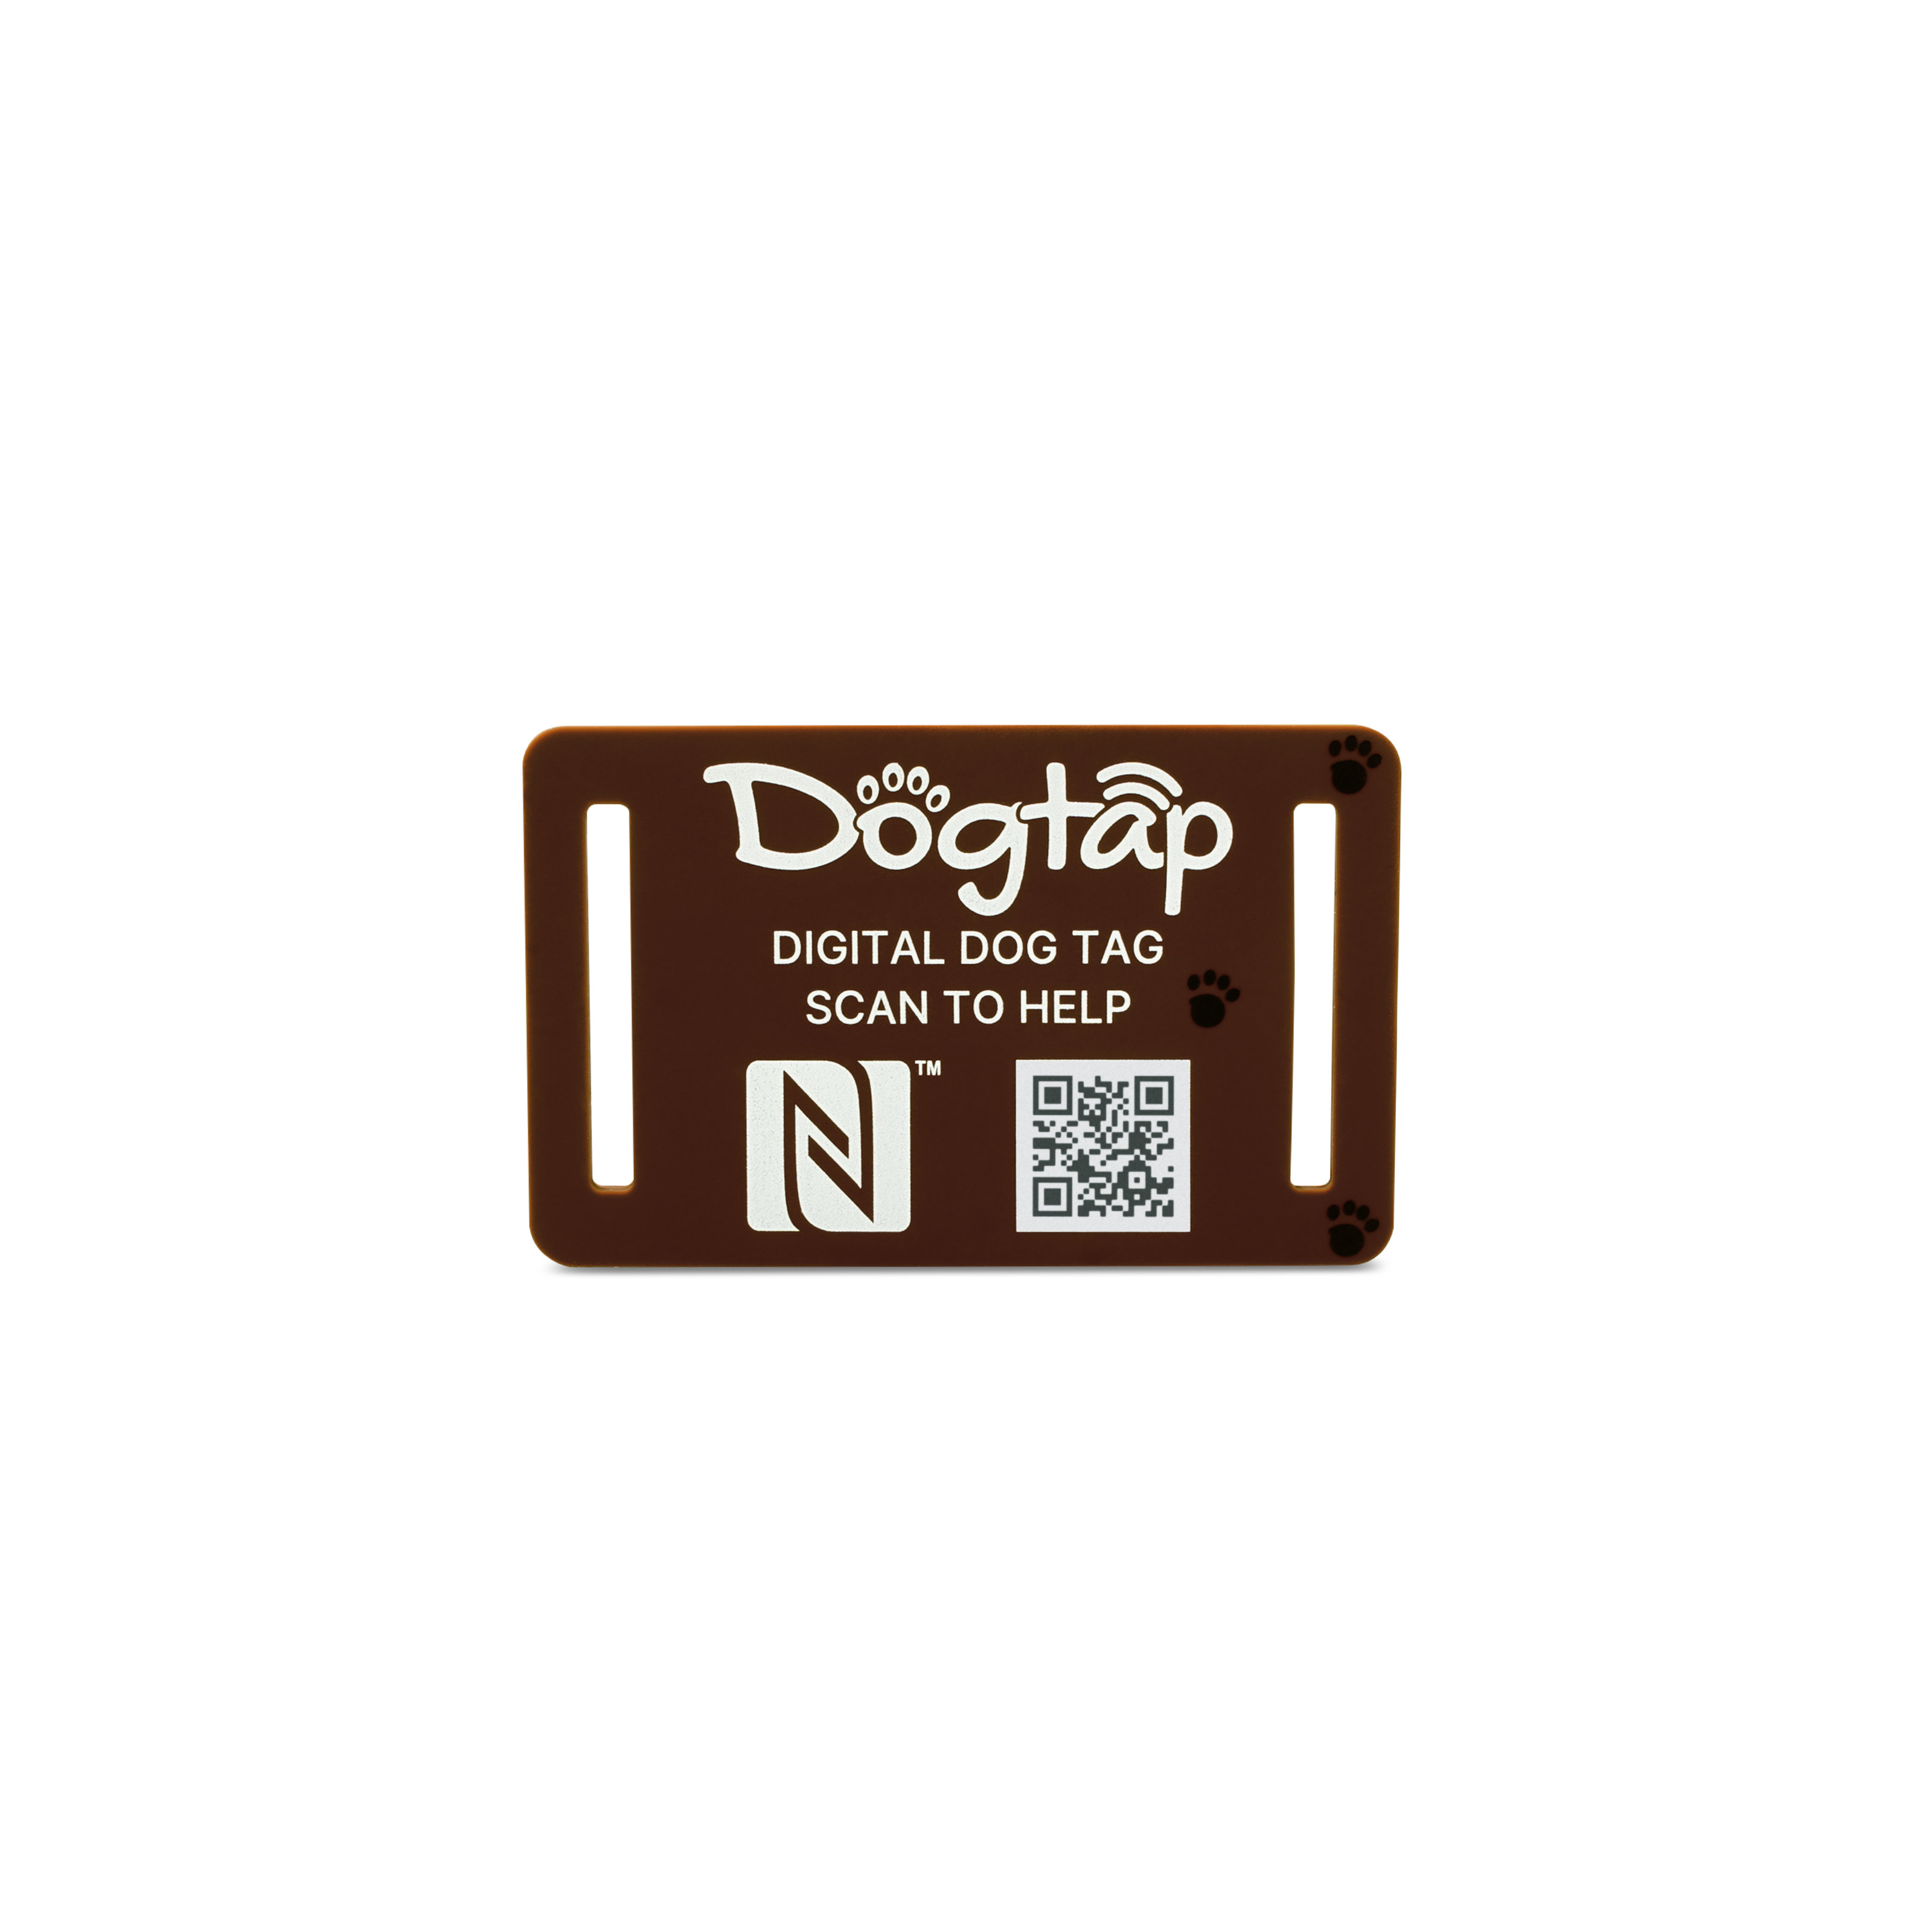 Dogtap Light Small - Digitale Hundemarke  - Silikon - 50 x 30 mm - braun